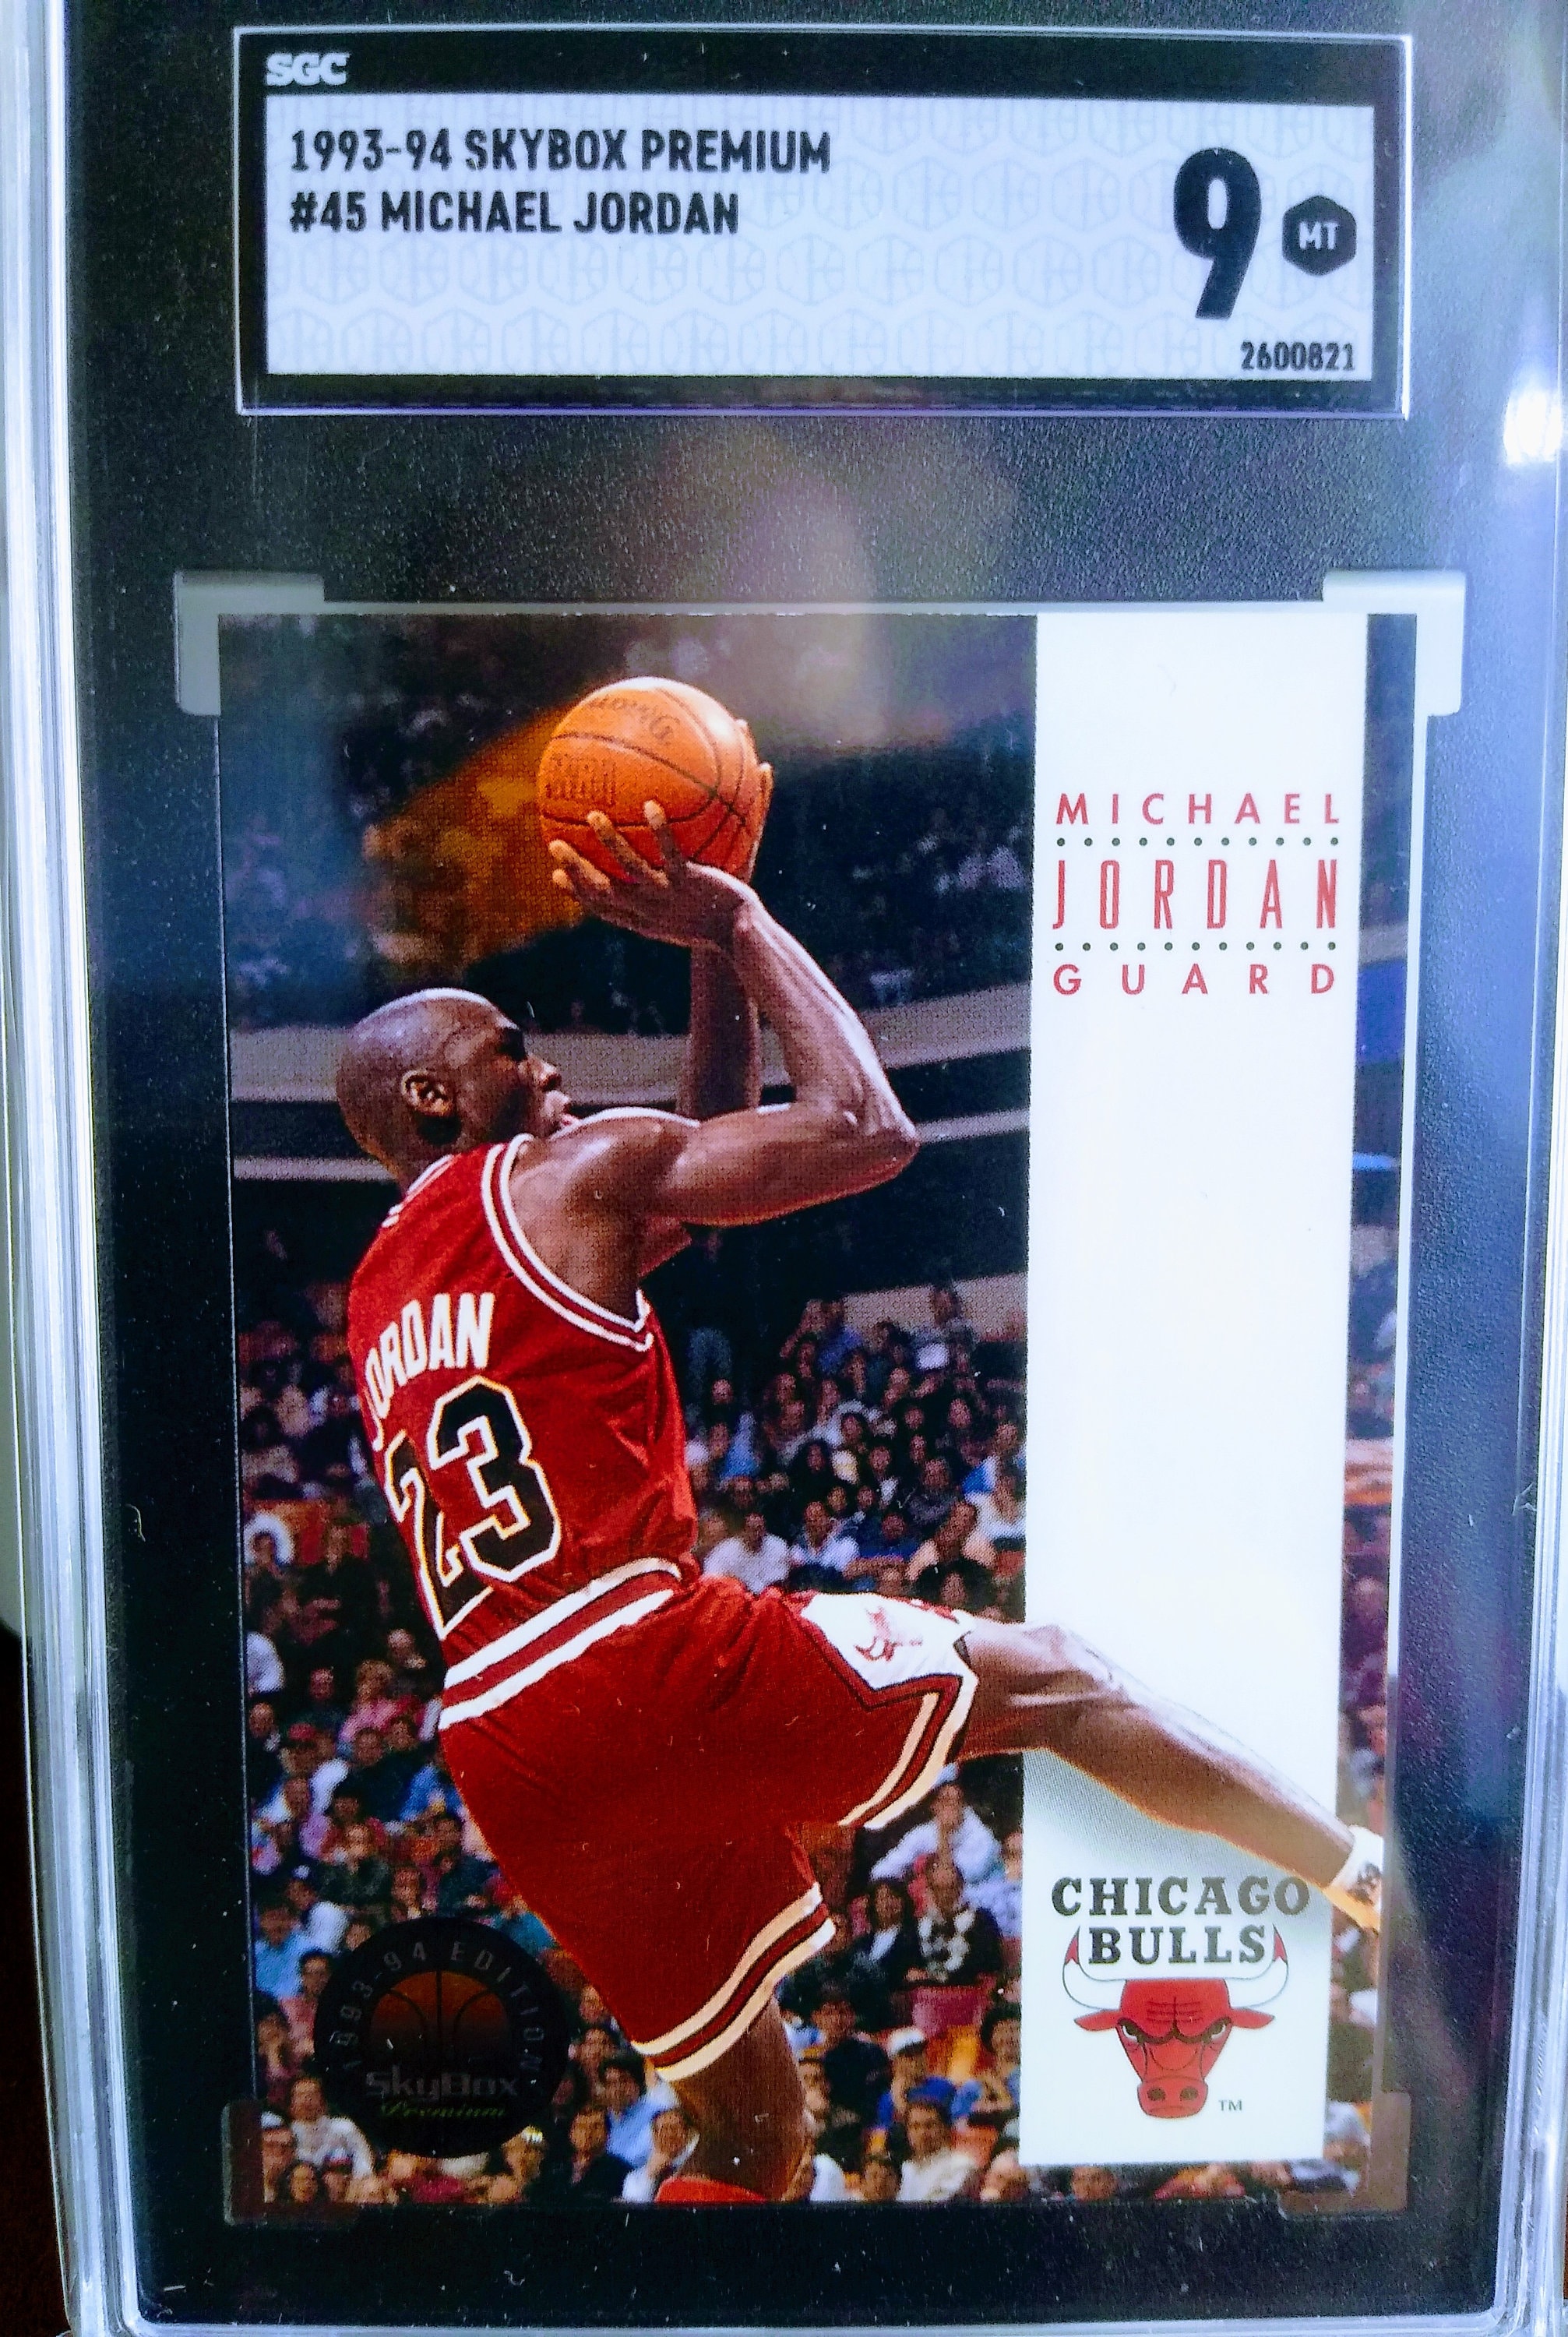 1996 Skybox Premium Kobe Bryant los Angeles Lakers-guard -  Israel